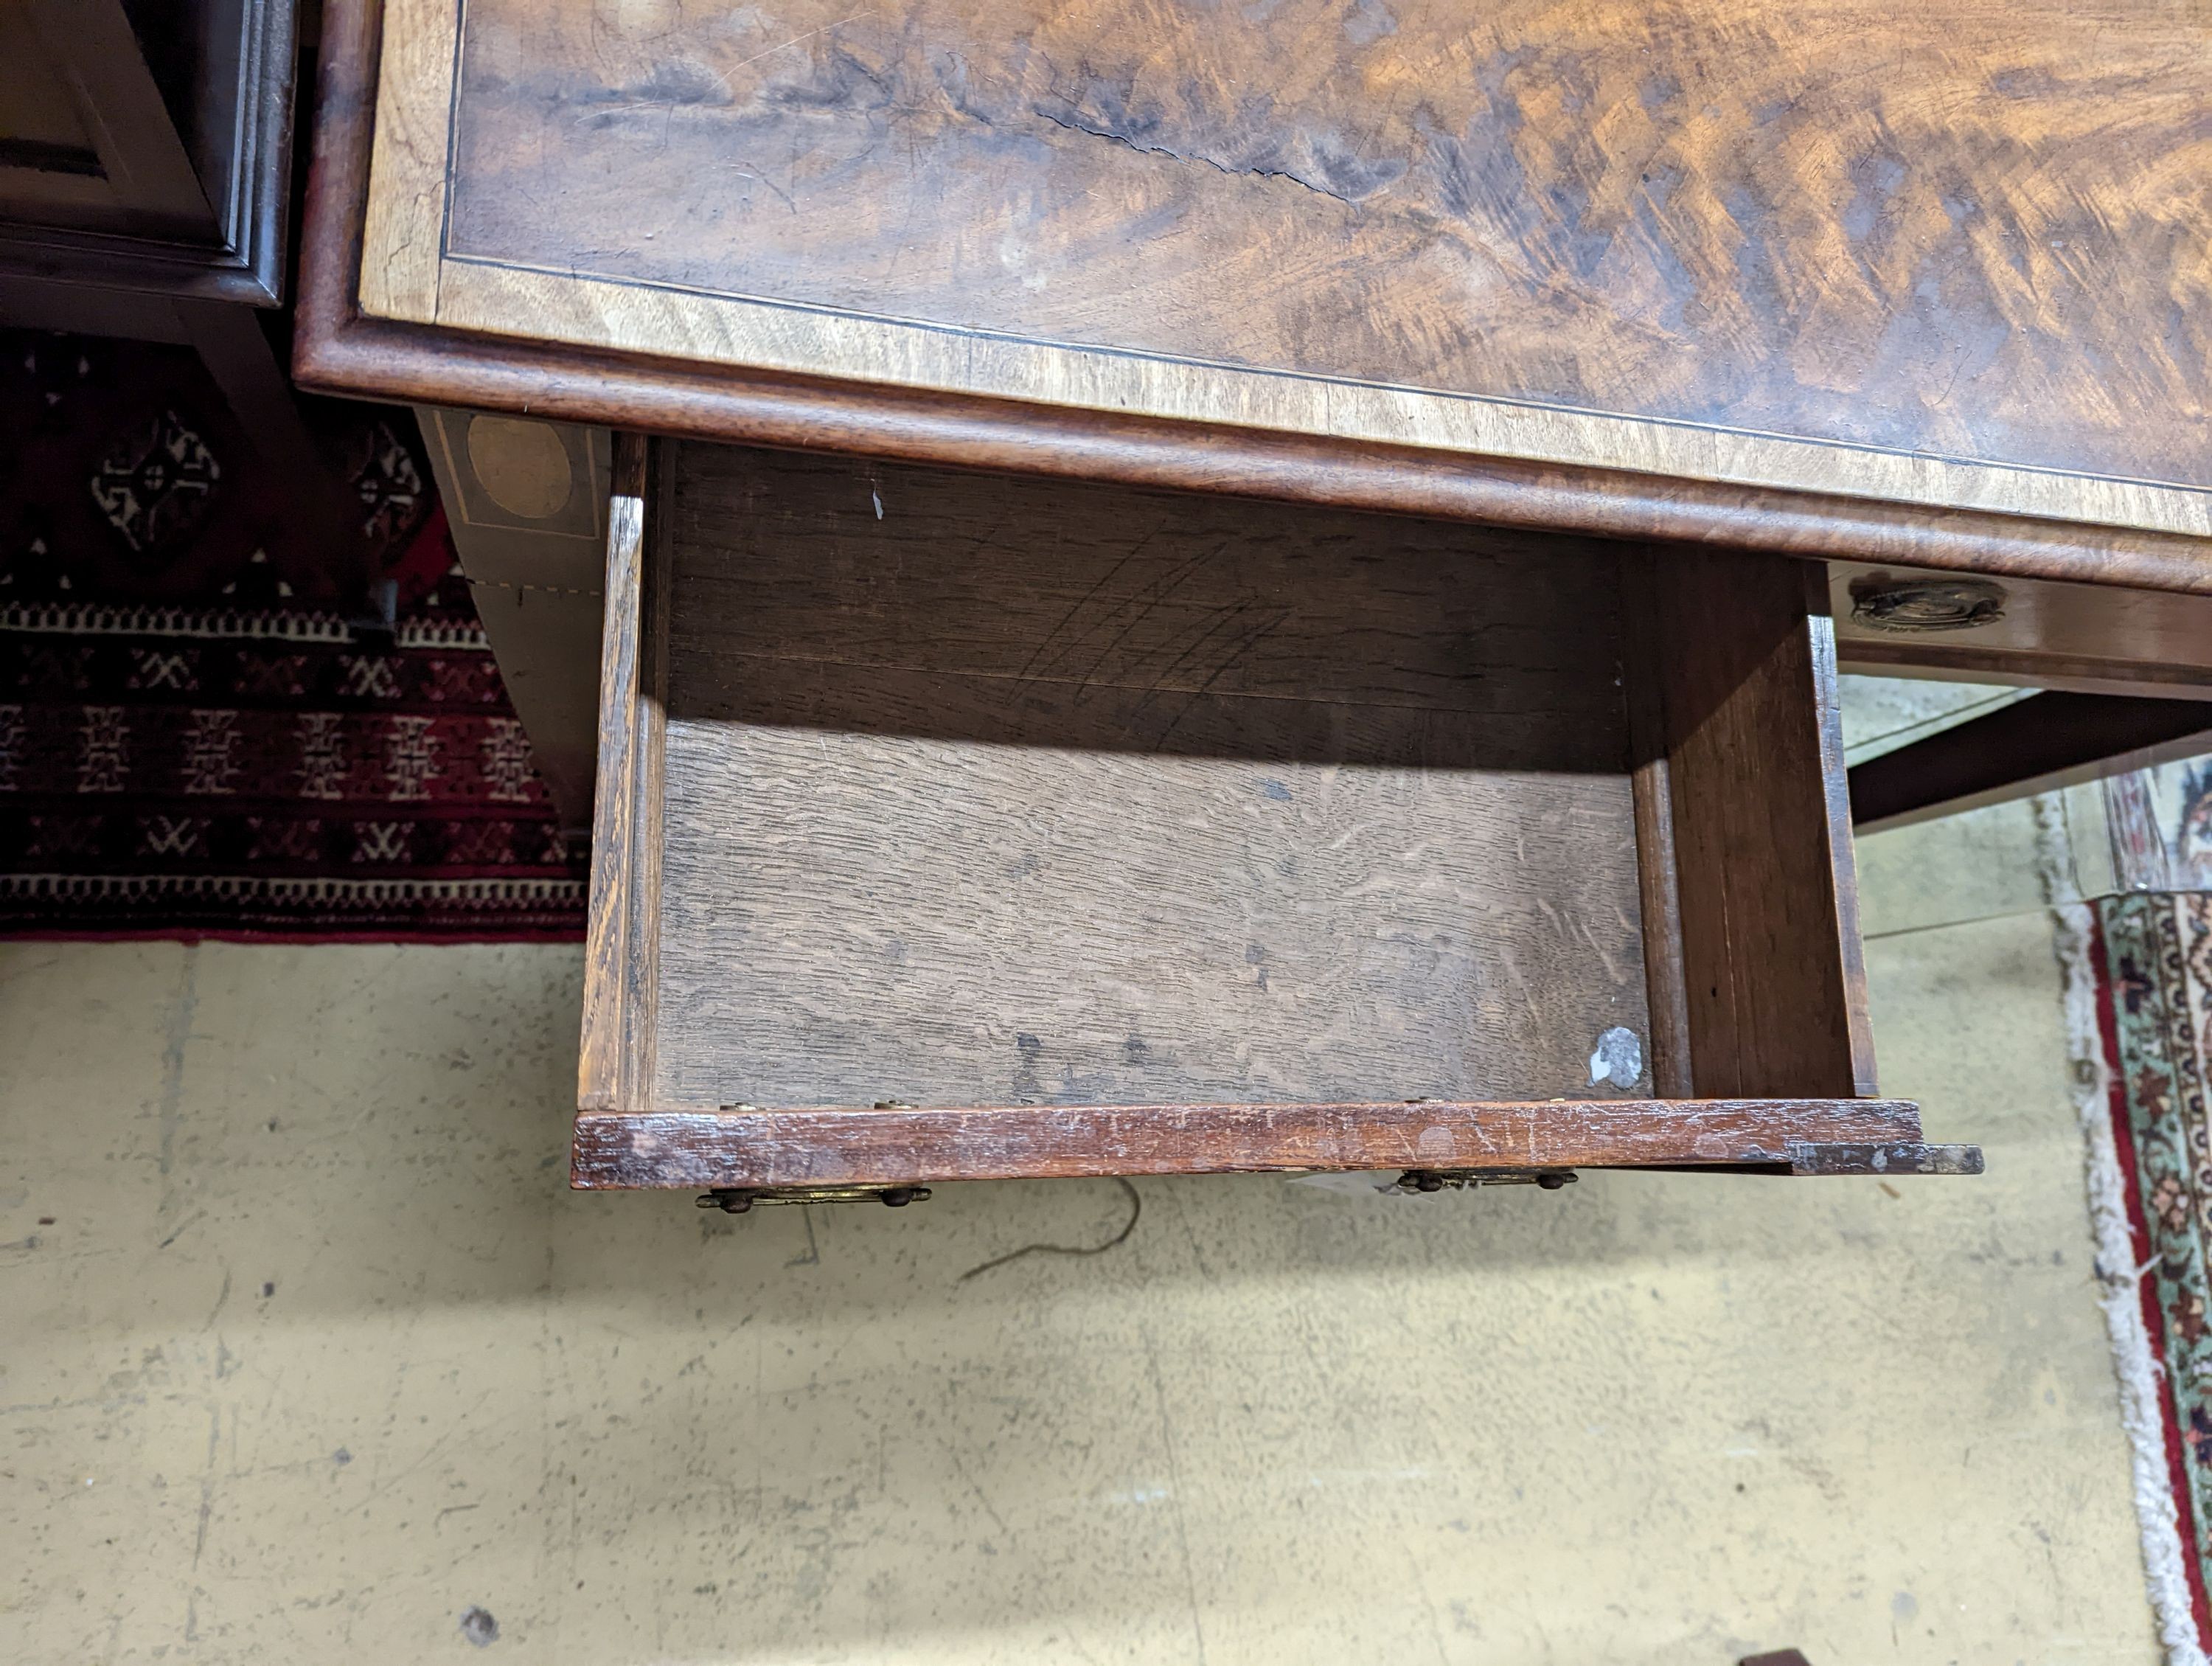 A George IV satinwood inlaid rectangular mahogany side table, width 93cm, depth 54cm, height 75cm